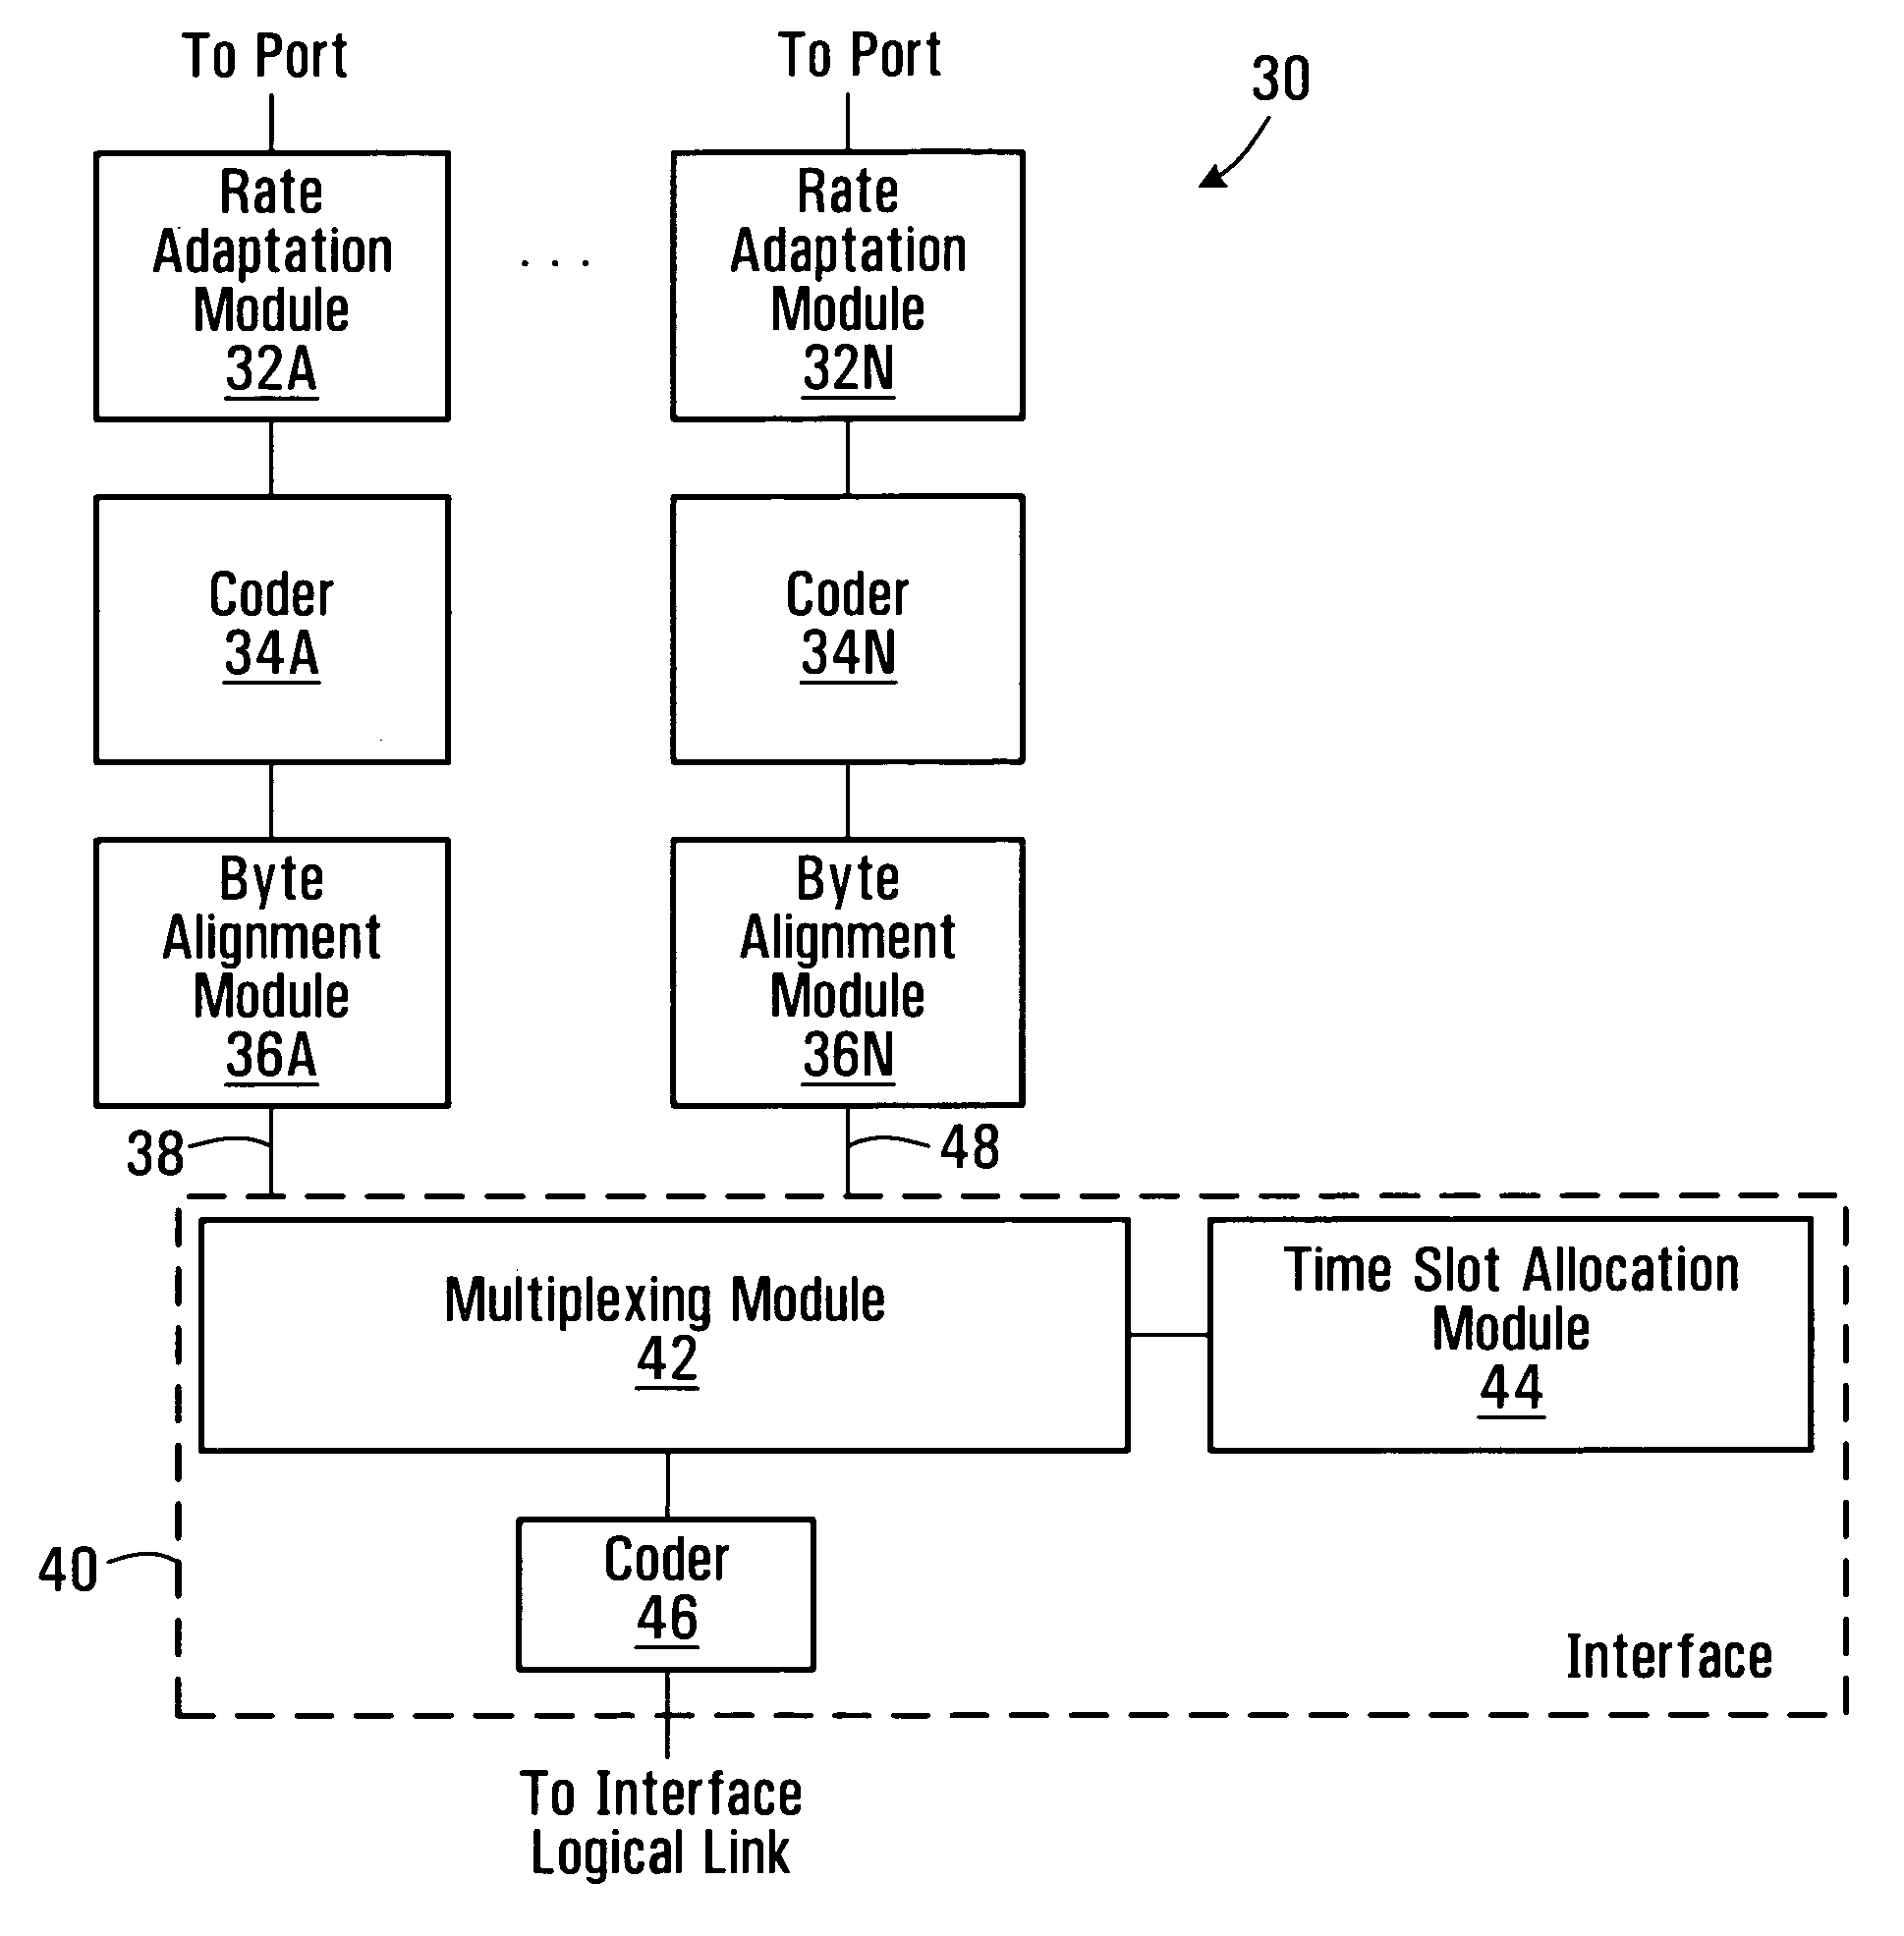 Port multiplexing apparatus and methods